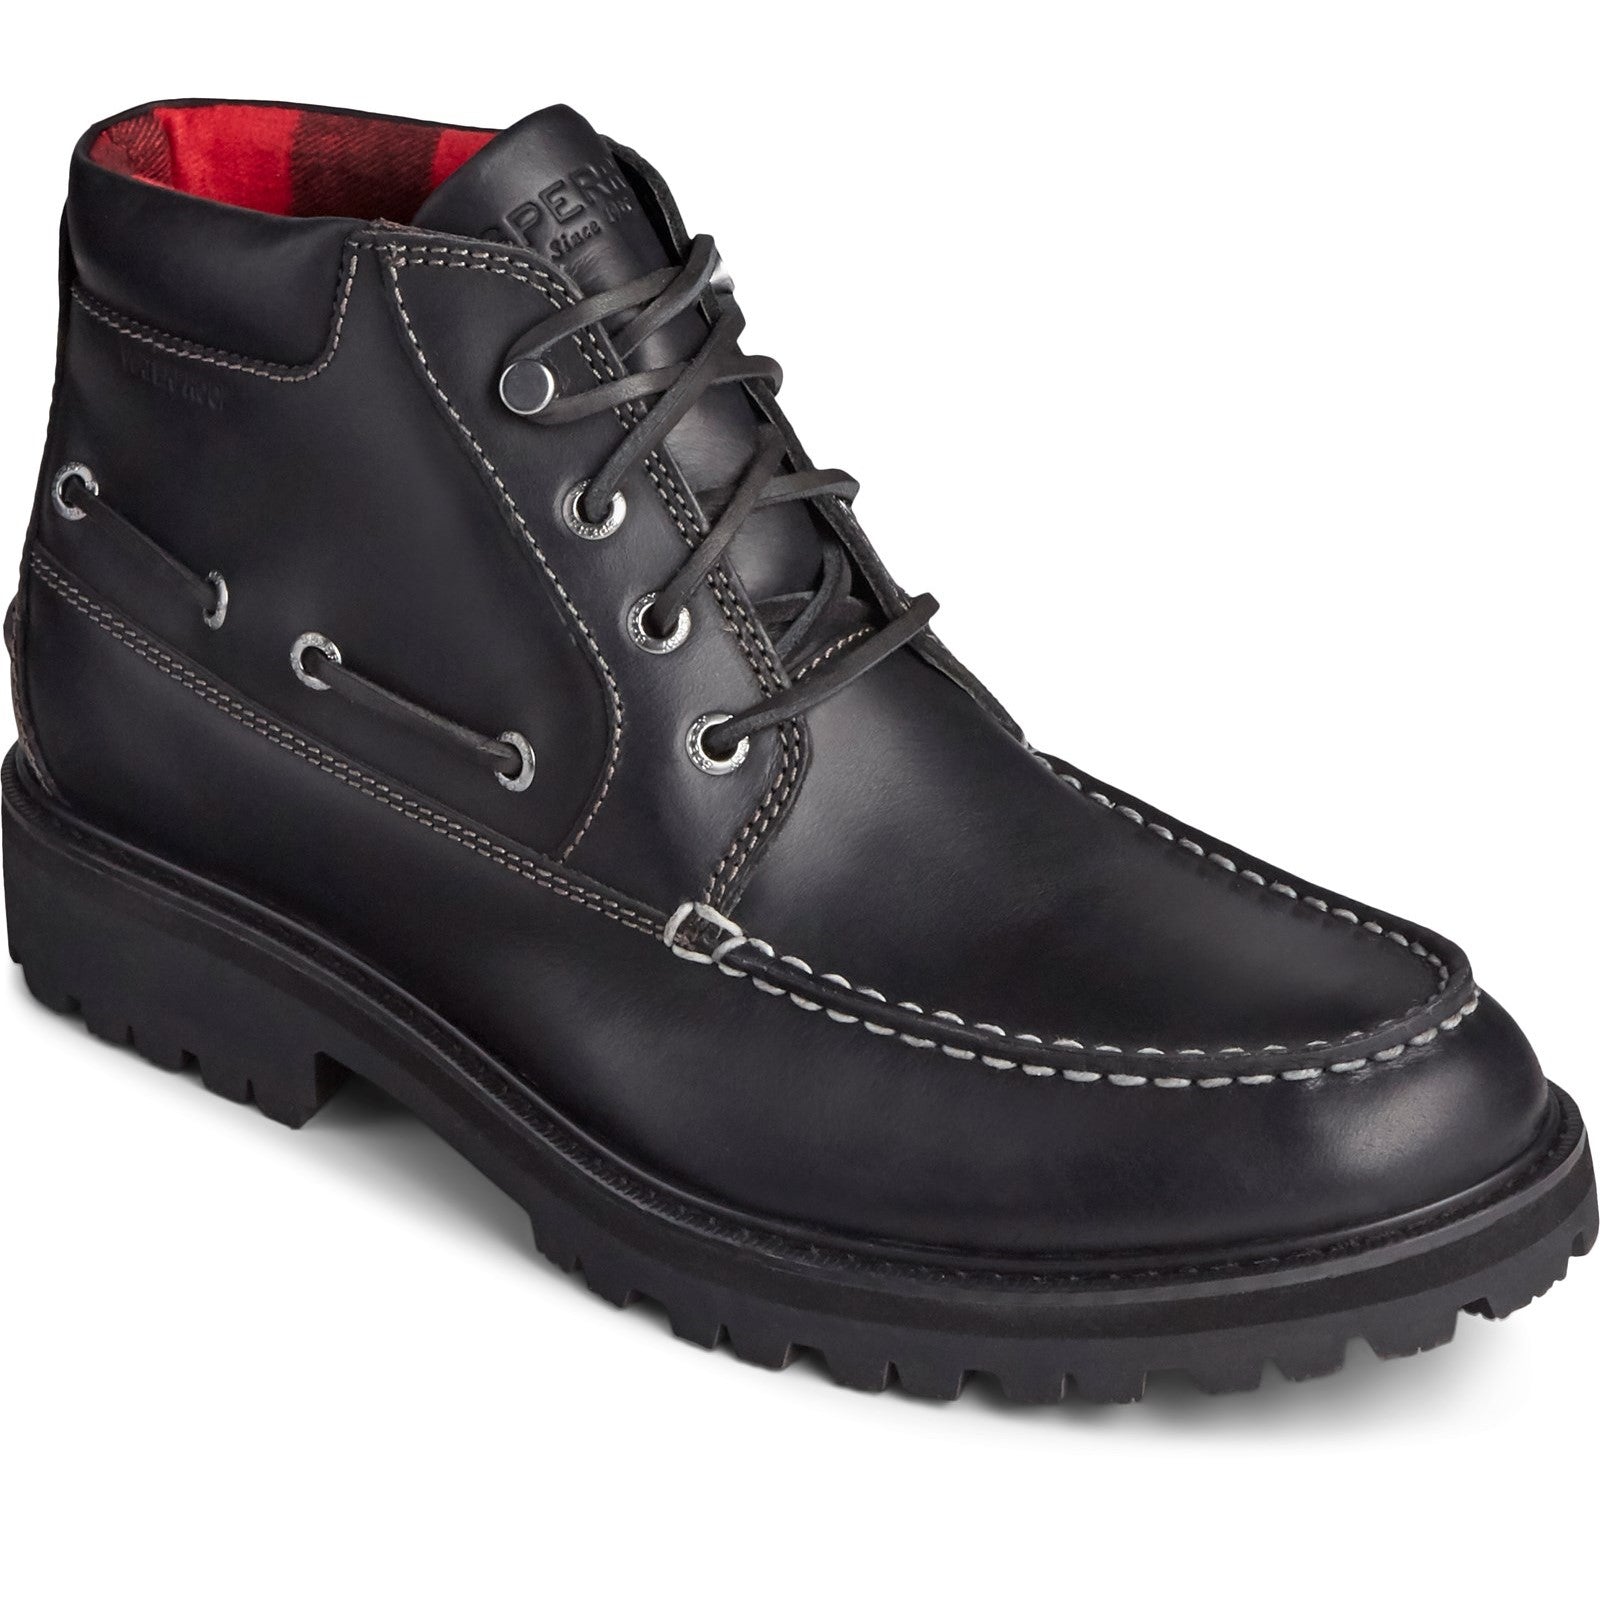 Sperry Mens Authentic Original Lug Chukka Boots - Black